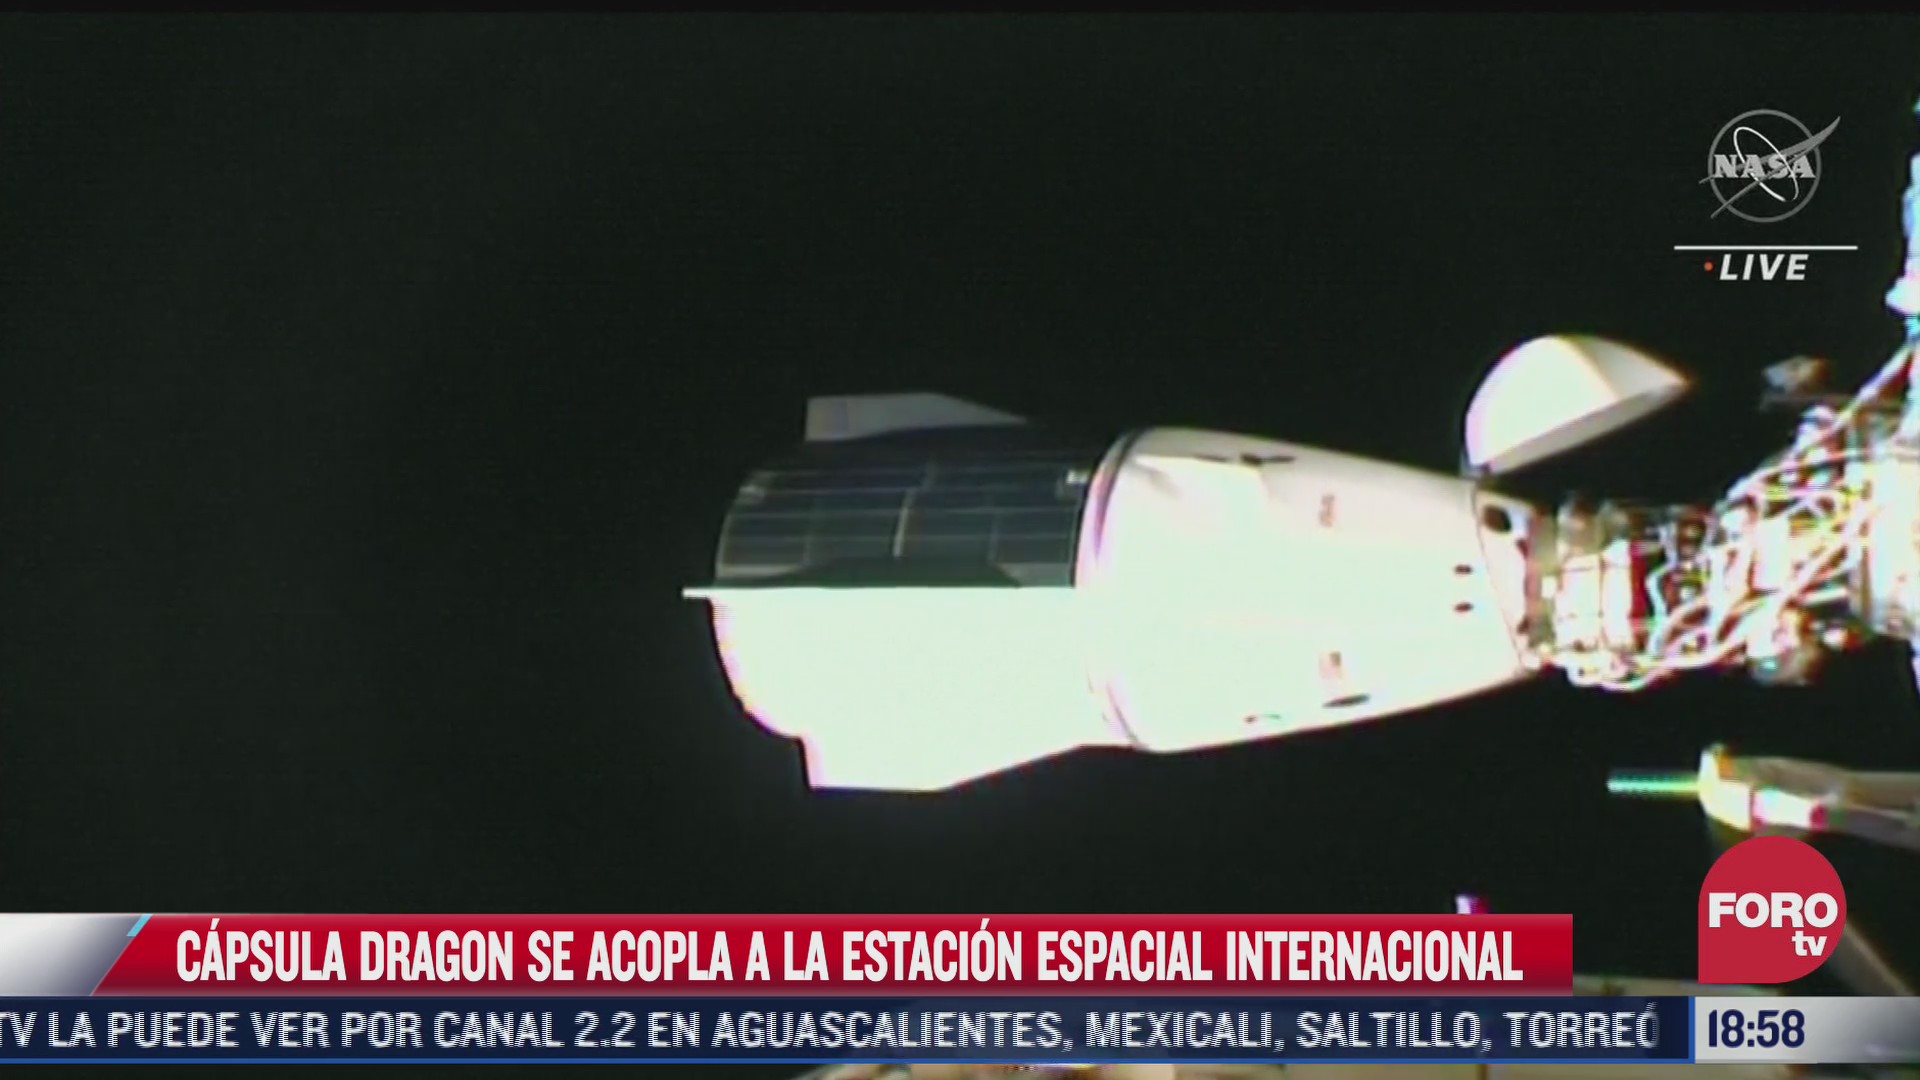 capsula dragon de spacex se acopla a la estacion espacial internacional